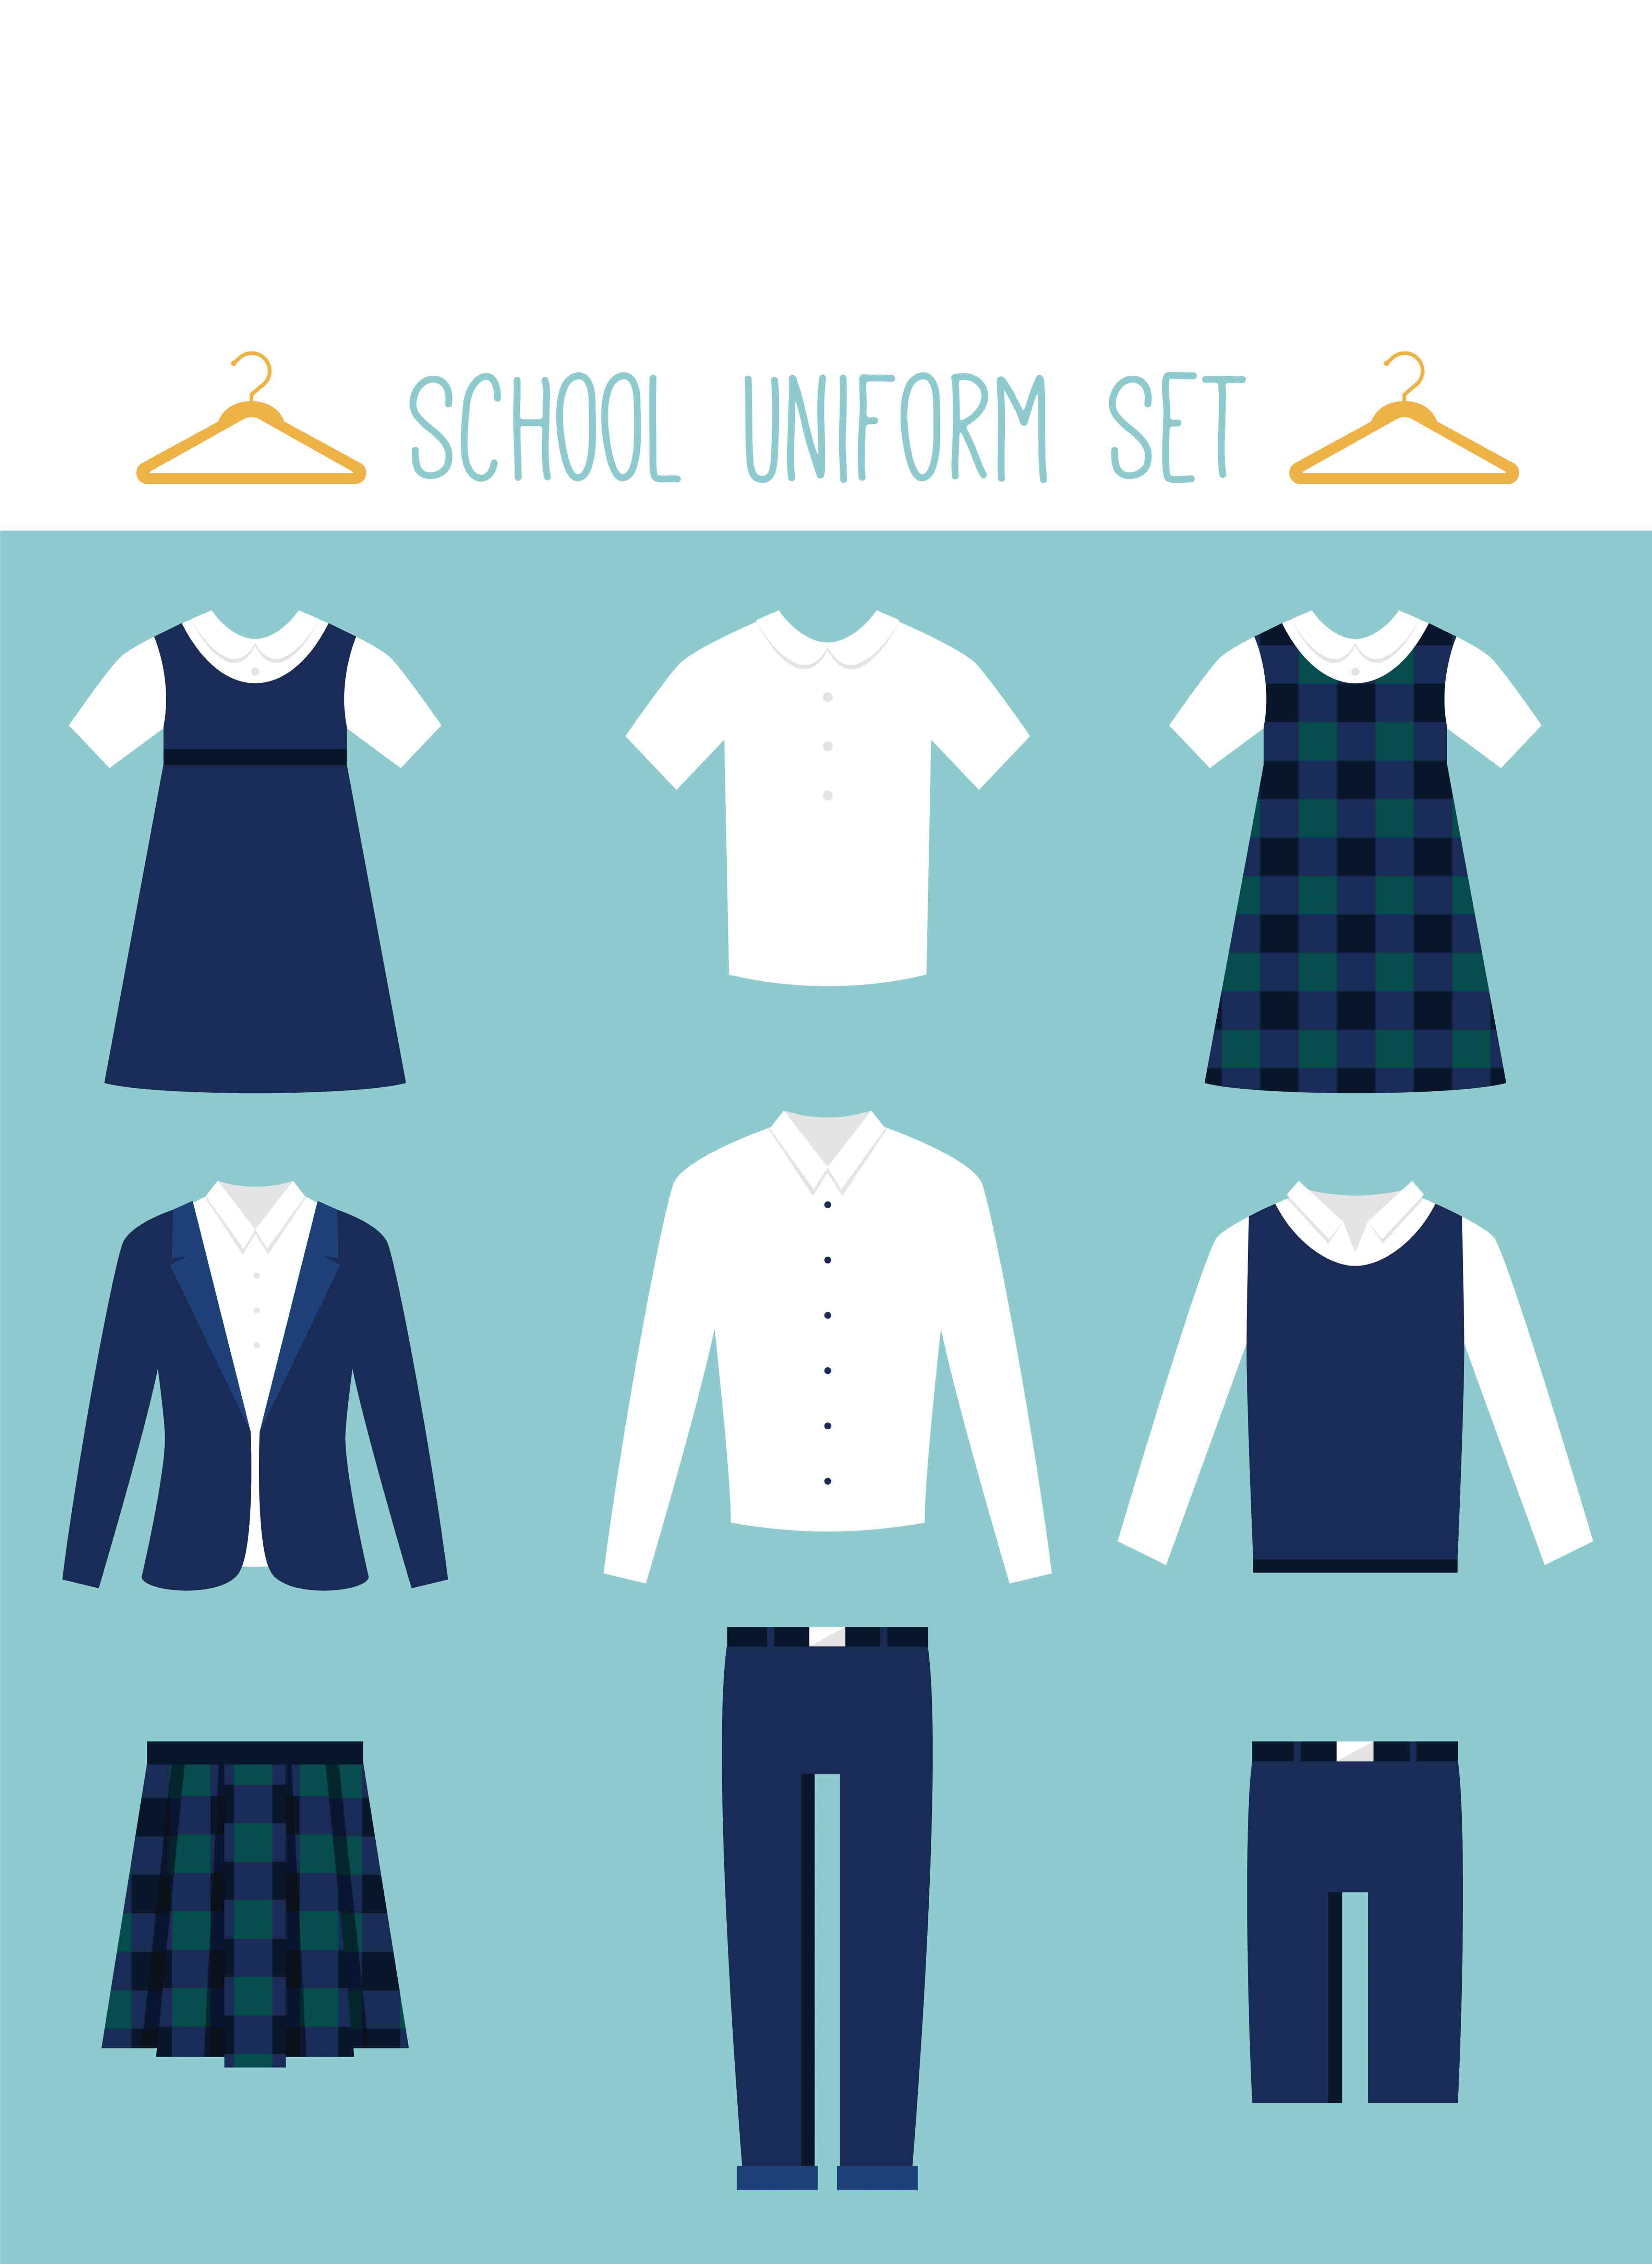 Why is School Uniform Important?